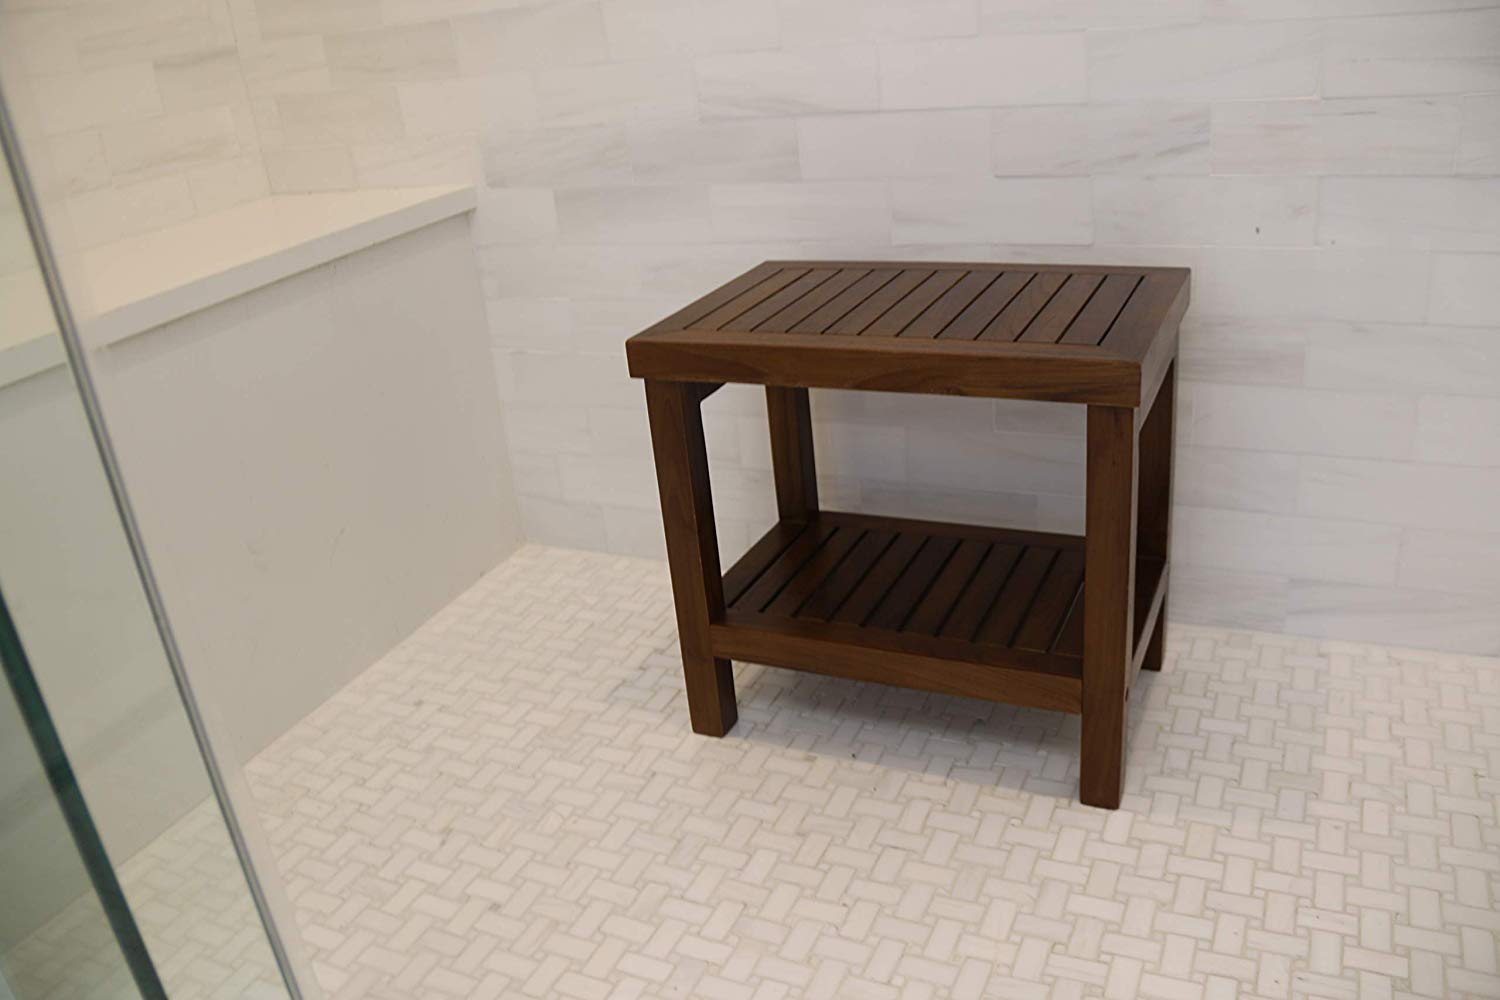 ALA TEAK Wood Shower Bath Spa Waterproof Stool Bench with Shelf Brown